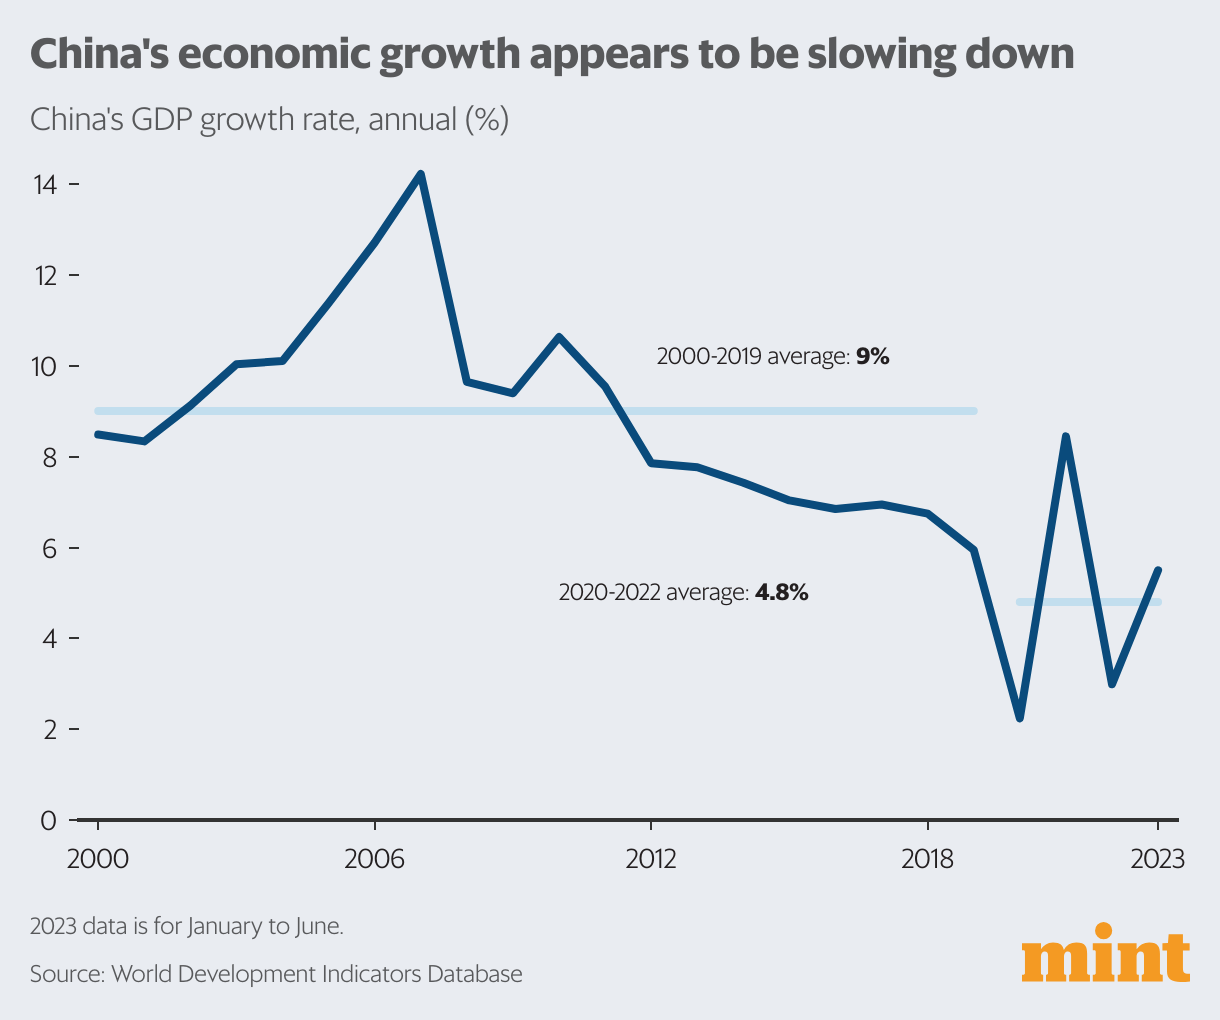 economic slowdown in China